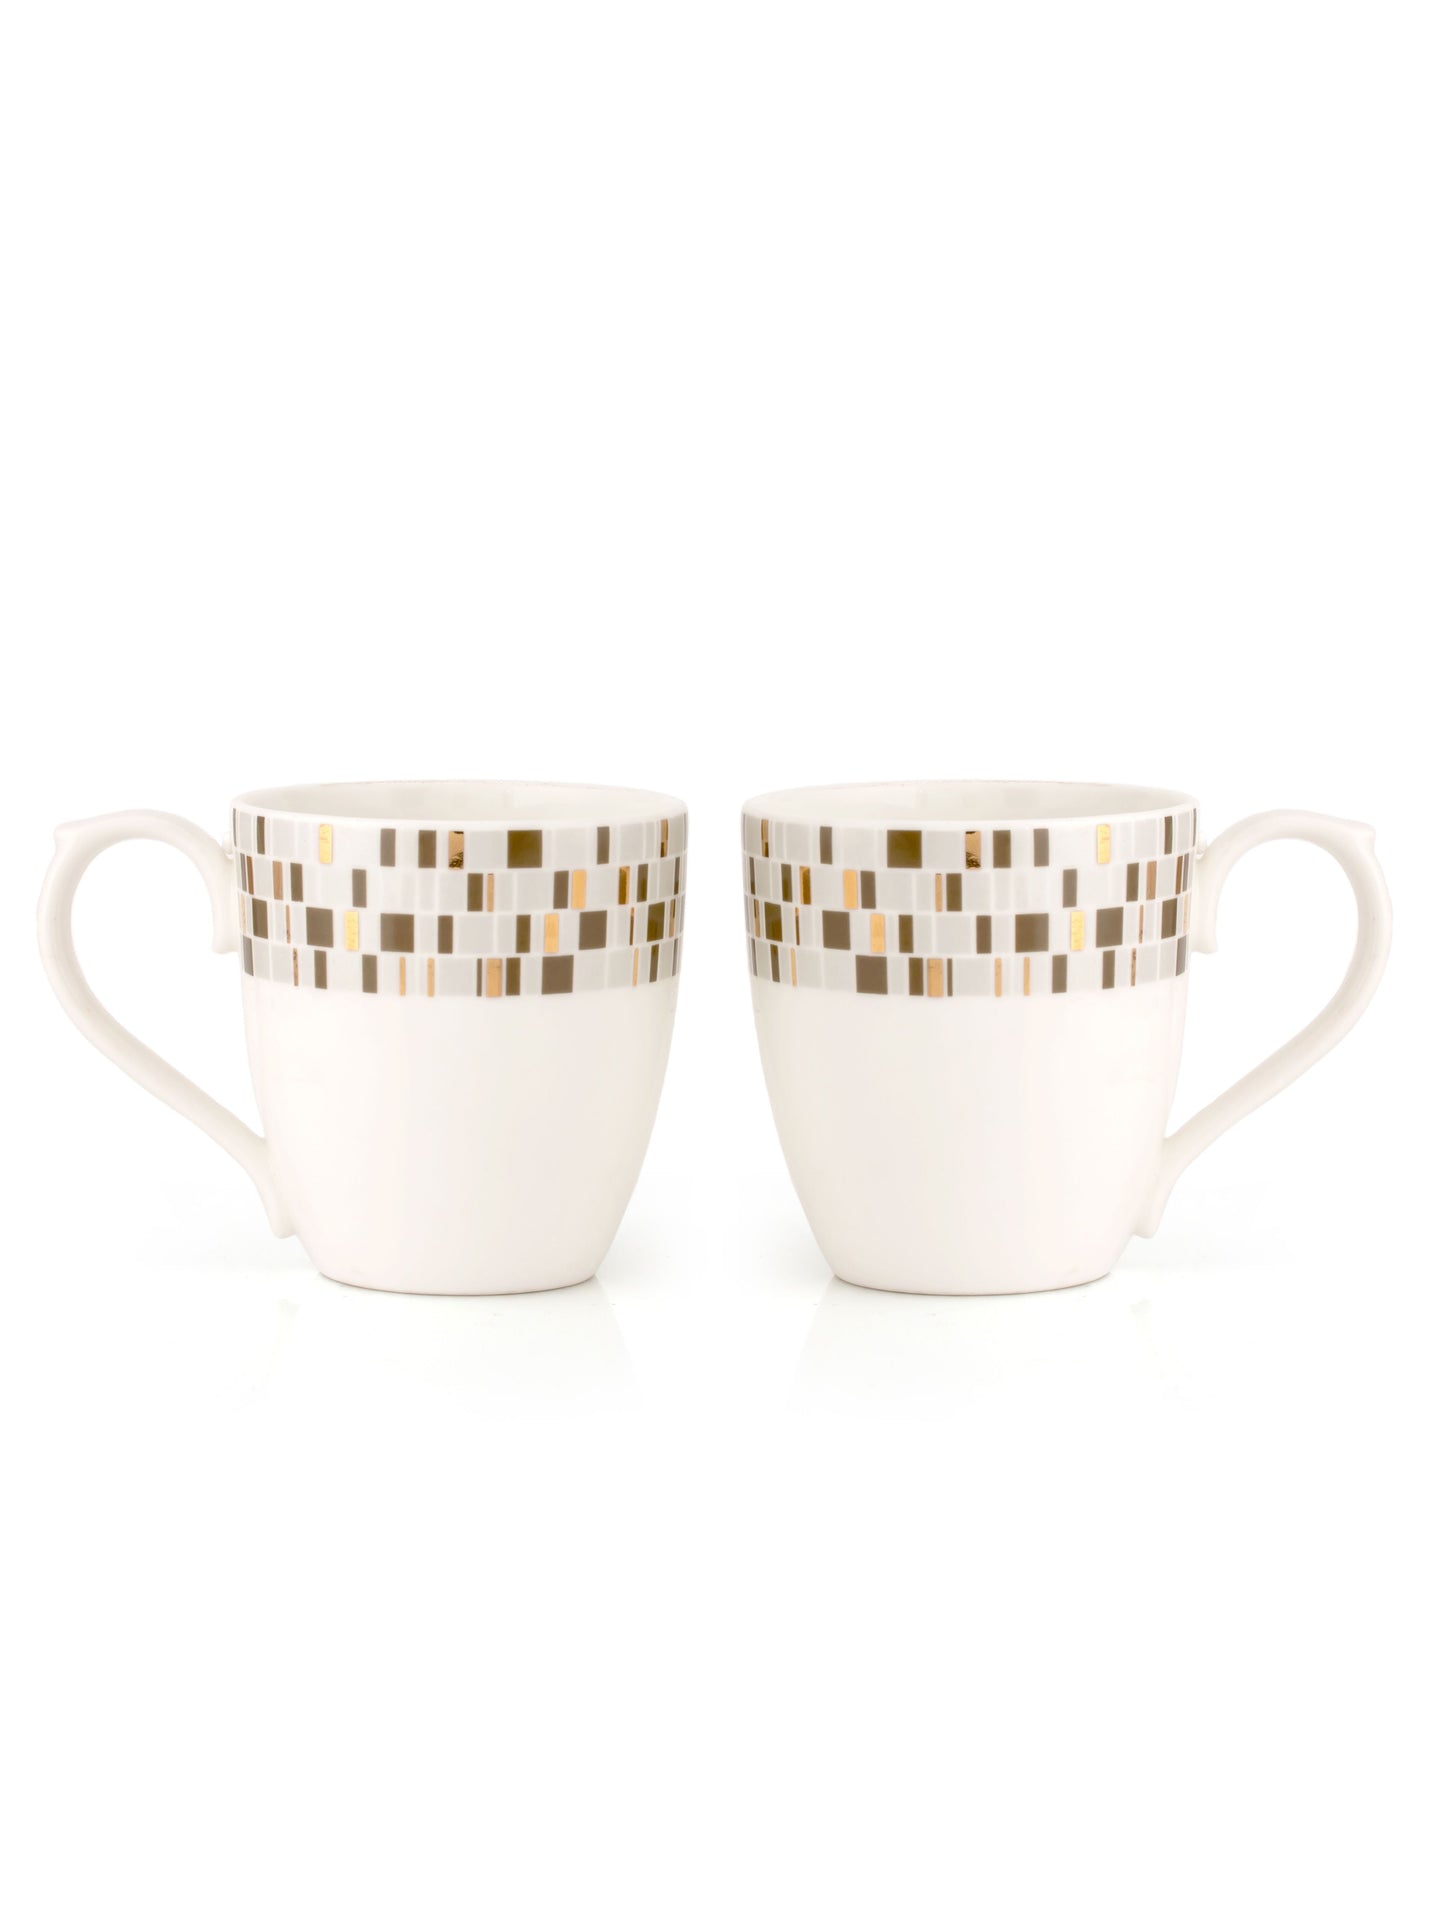 JCPL Polo Aroma Coffee & Tea Mug Set of 6 (AS24)